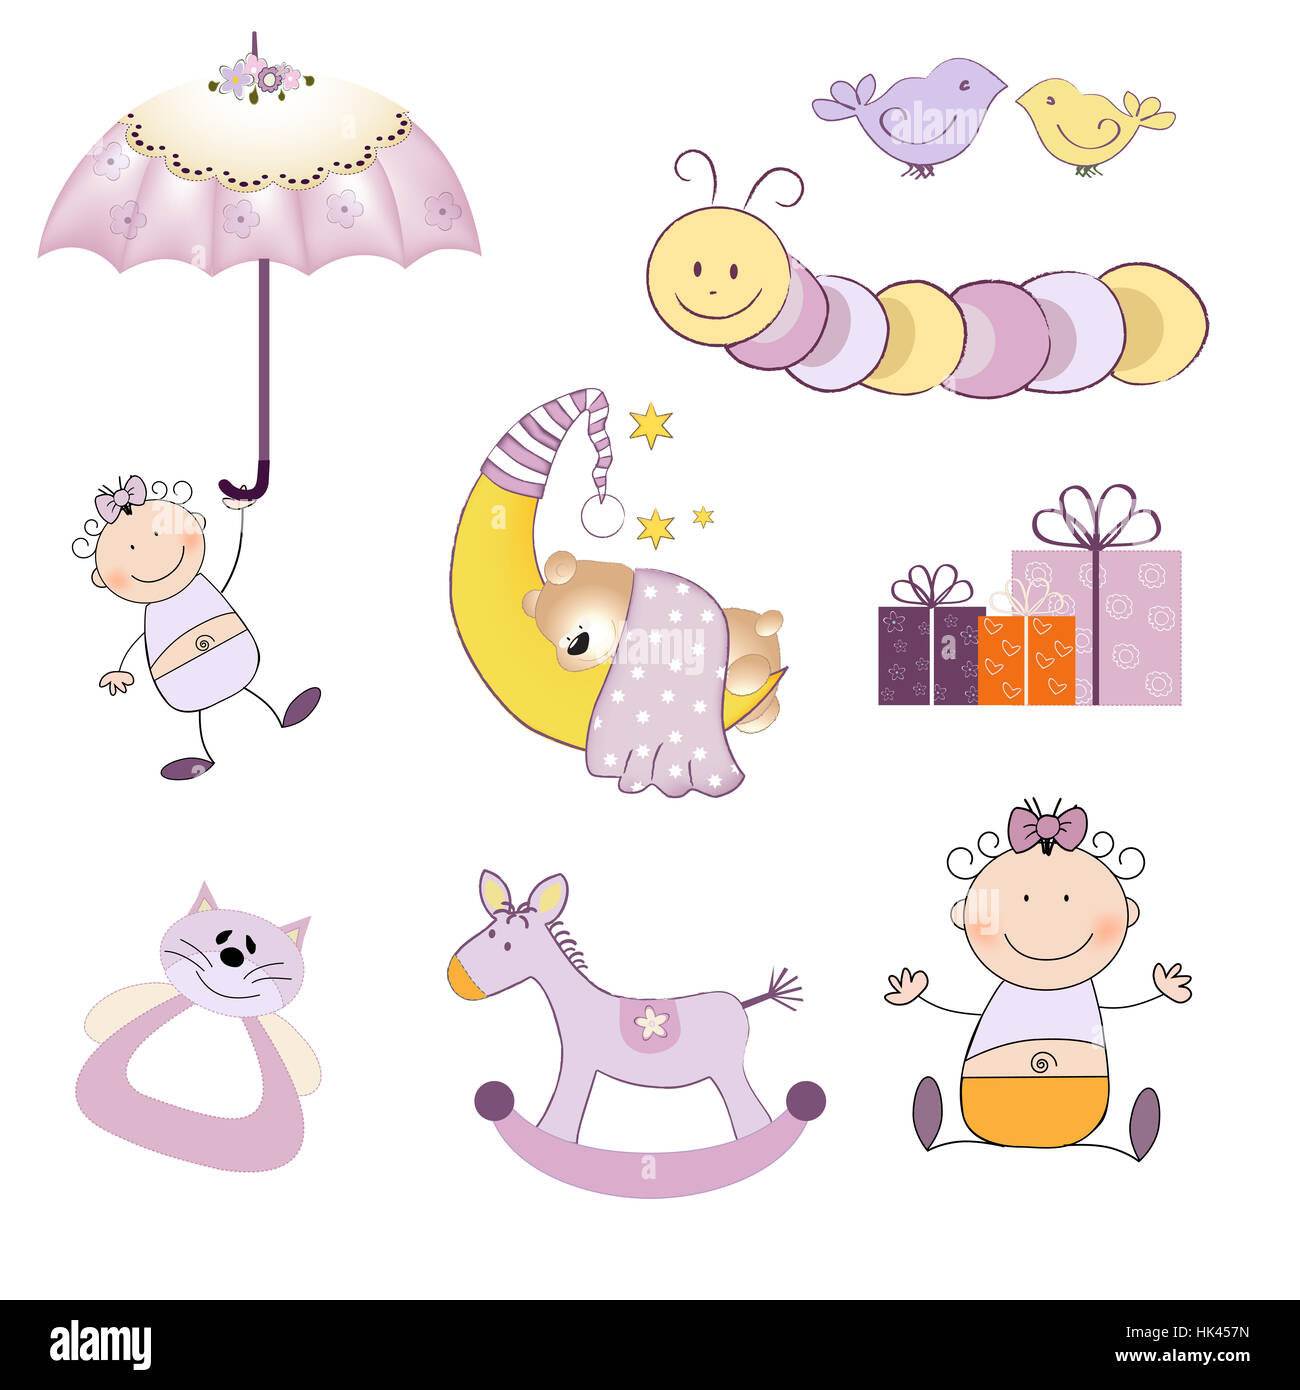 umbrella, illustration, collection, set, cartoon, vector, items, article, draw, Stock Photo